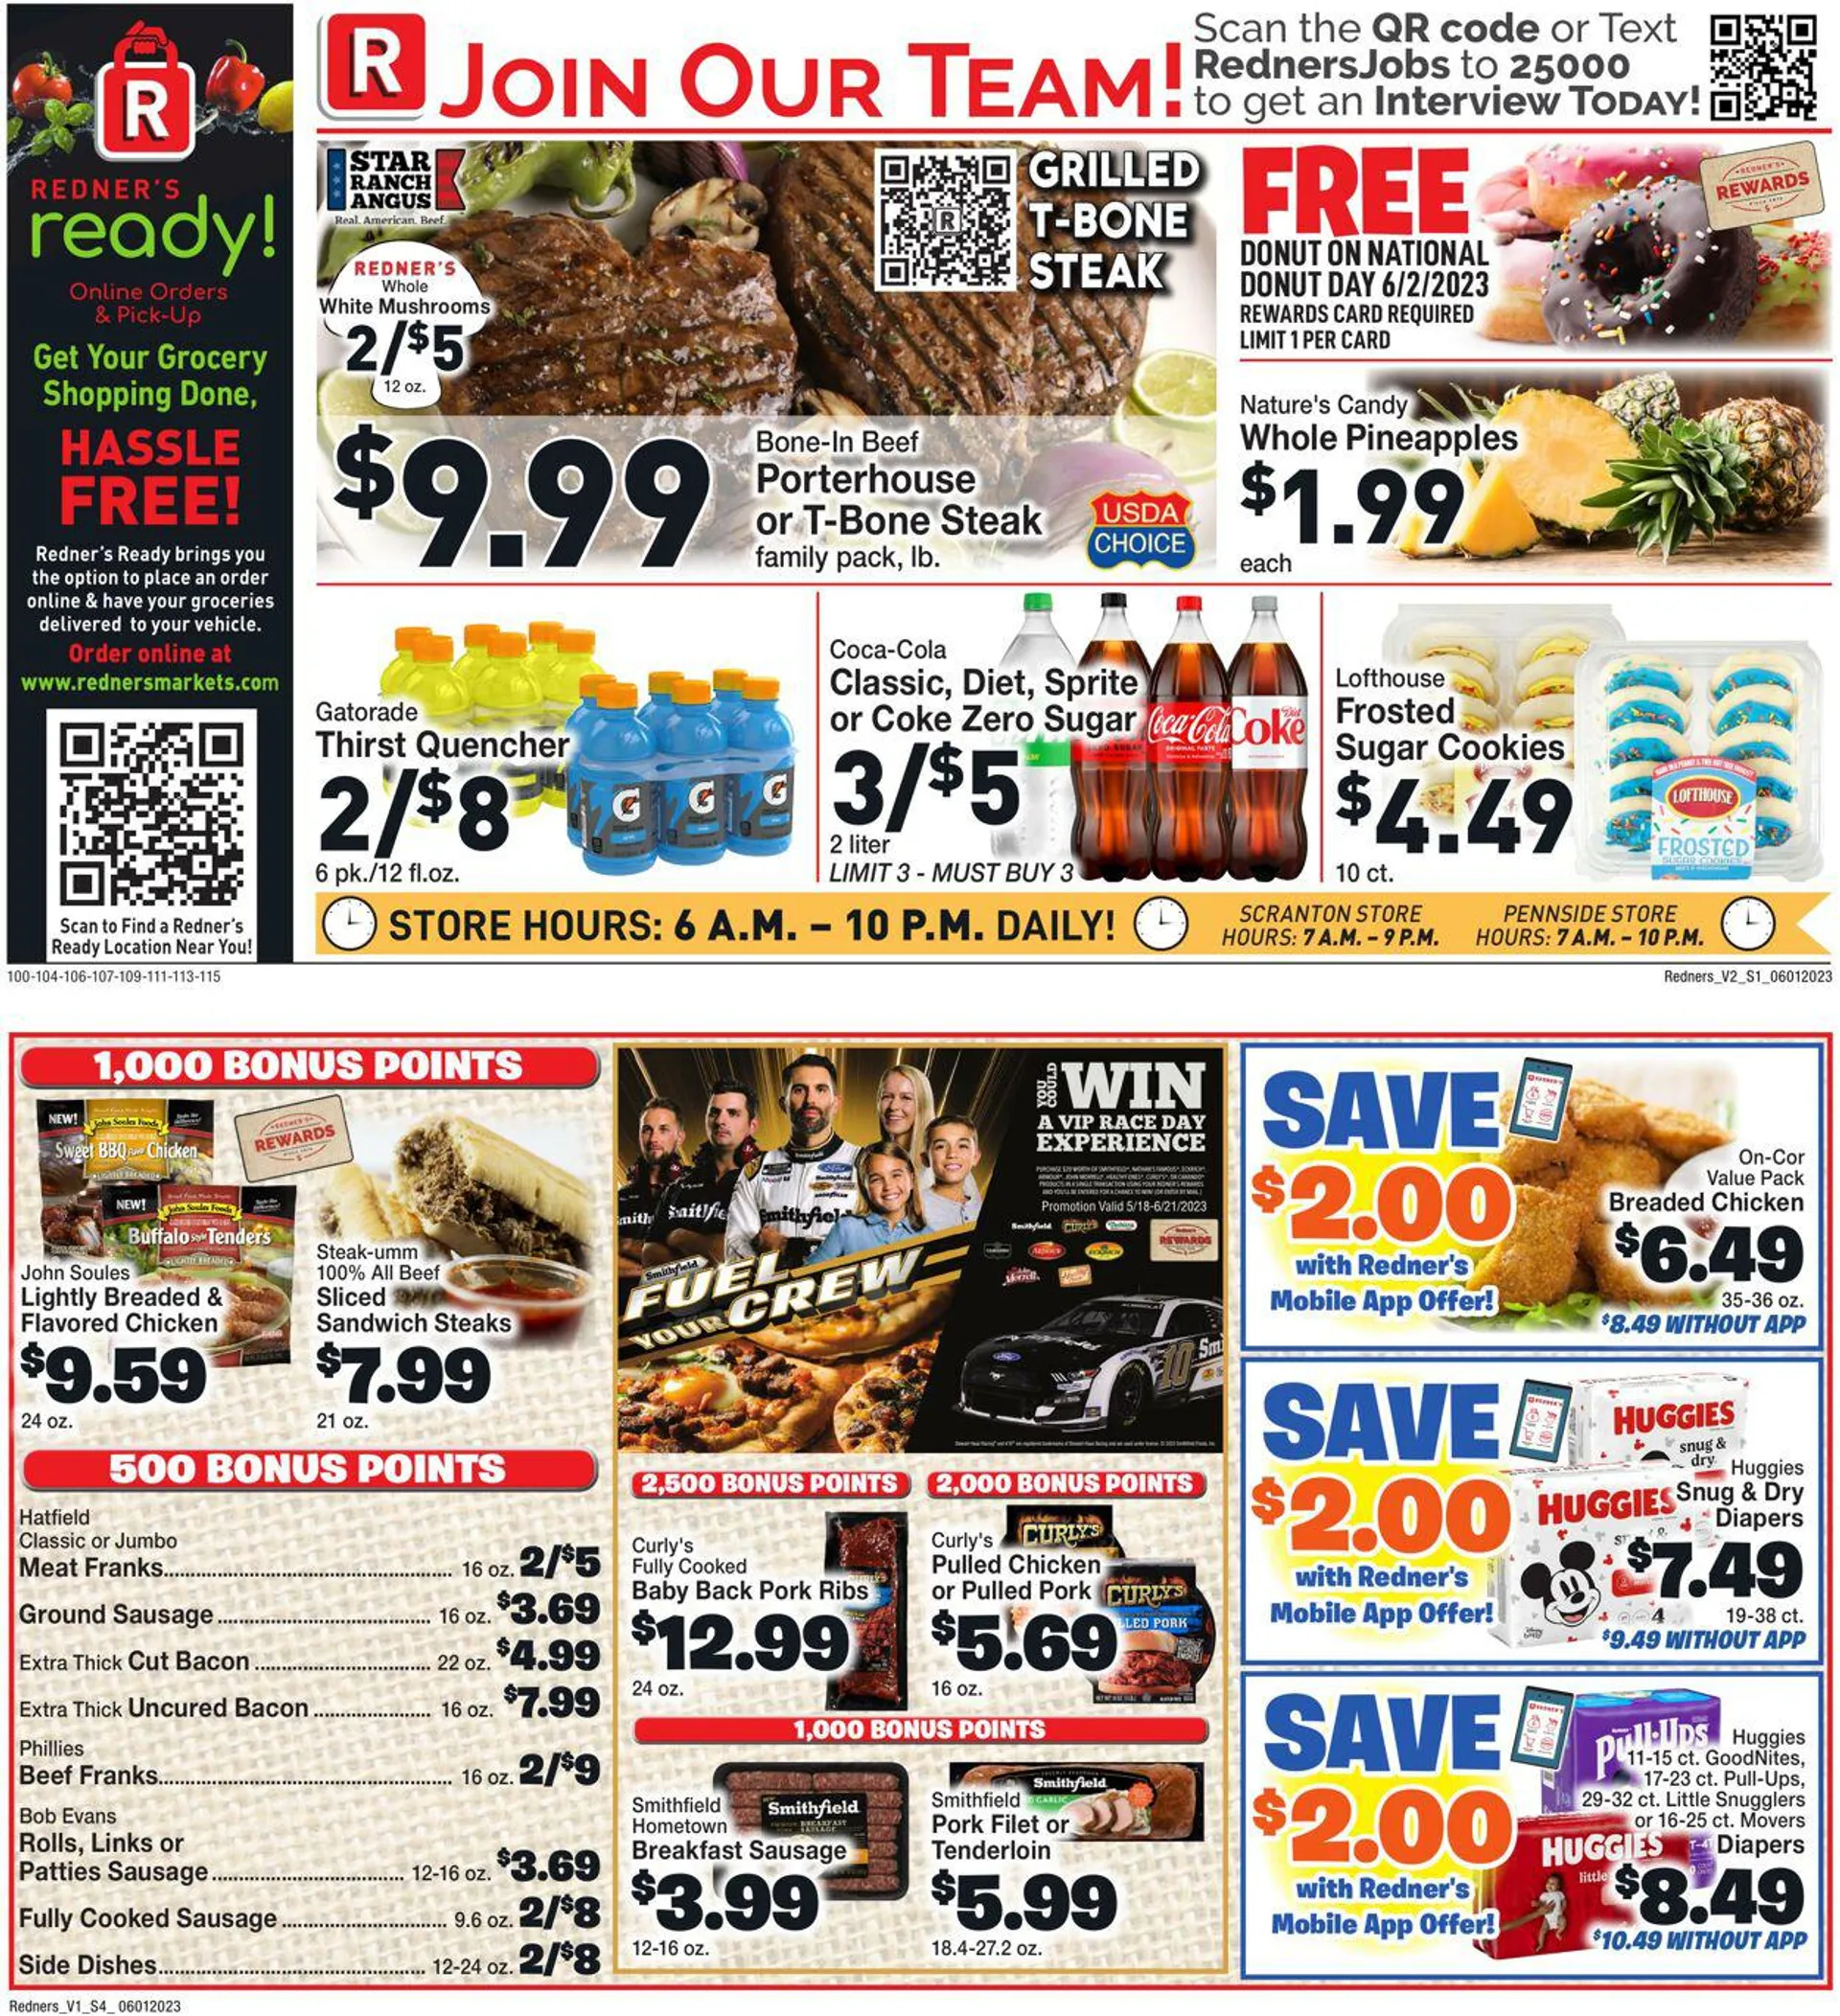 Redner’s Warehouse Market Current weekly ad - 2